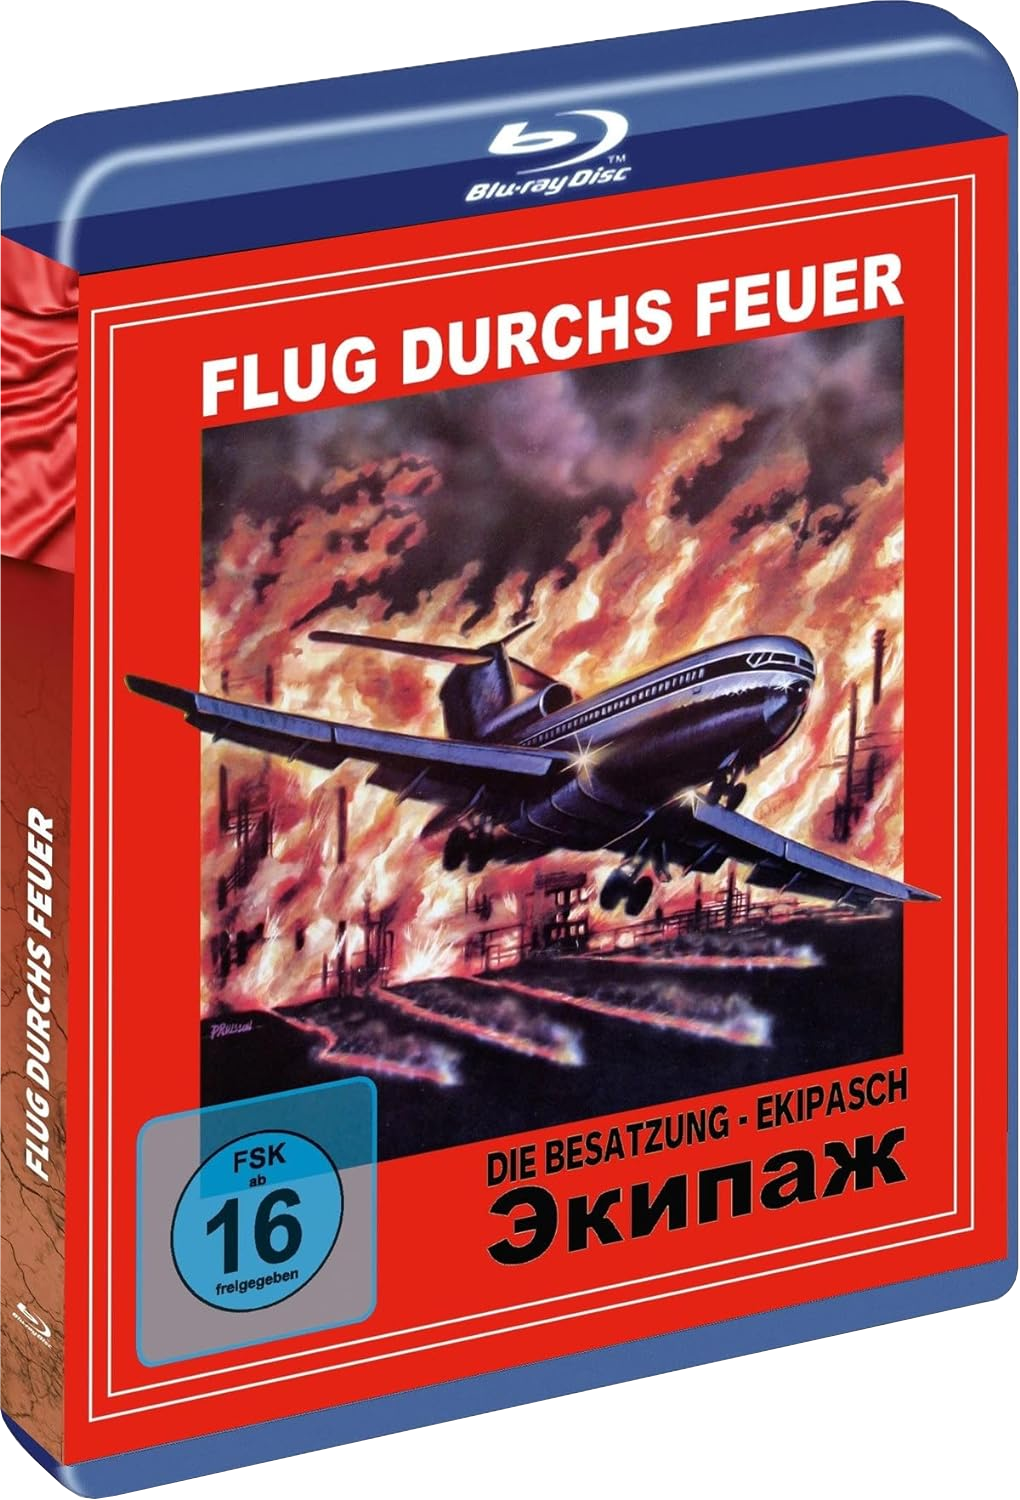 Flug durchs Feuer (Blu-ray) (Air Crew – Die Besatzung) Cover B